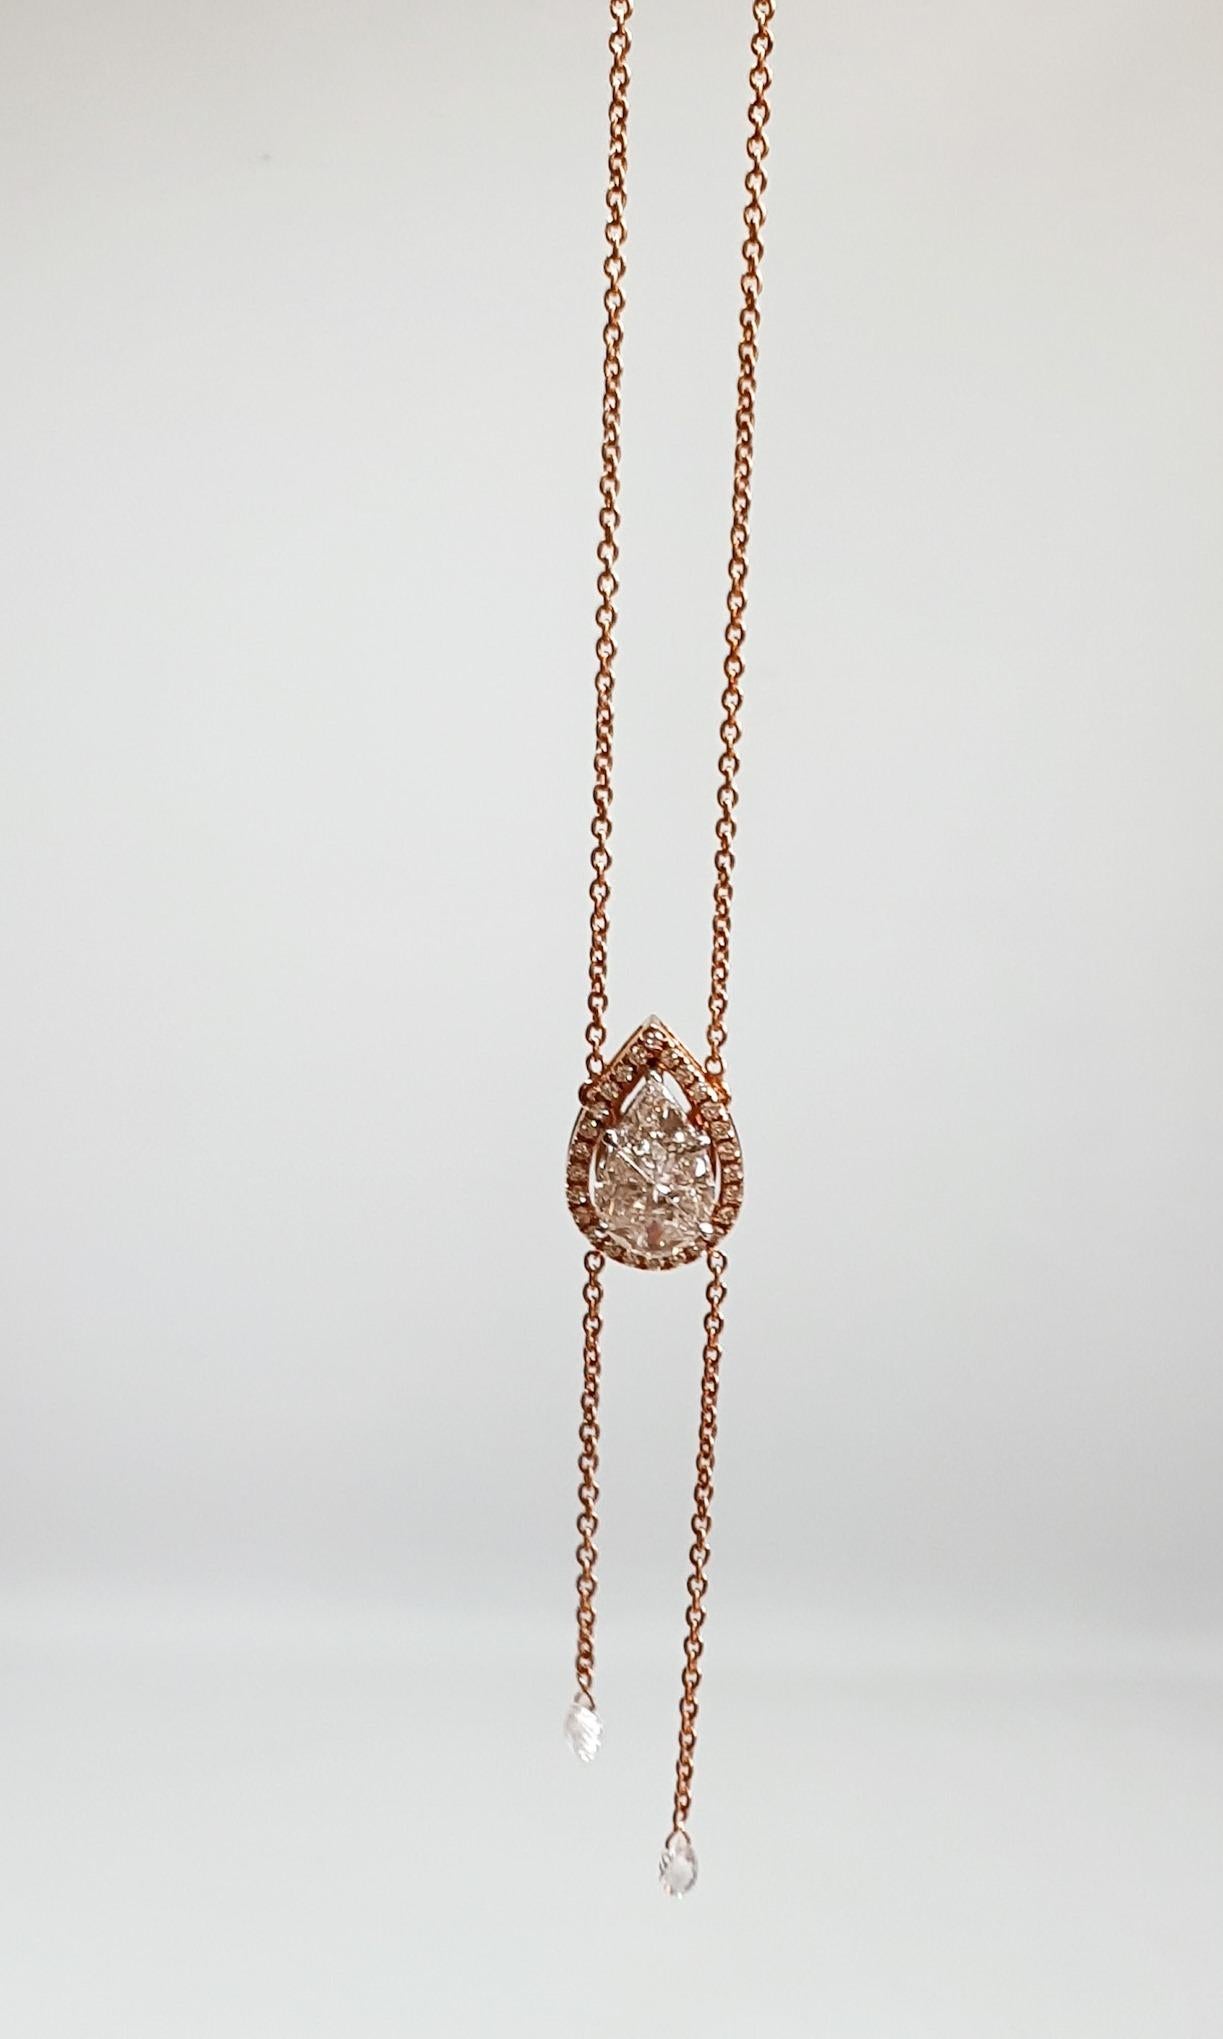 Brilliant Cut 18 Karat Rose Gold Diamond Pendant Necklace For Sale